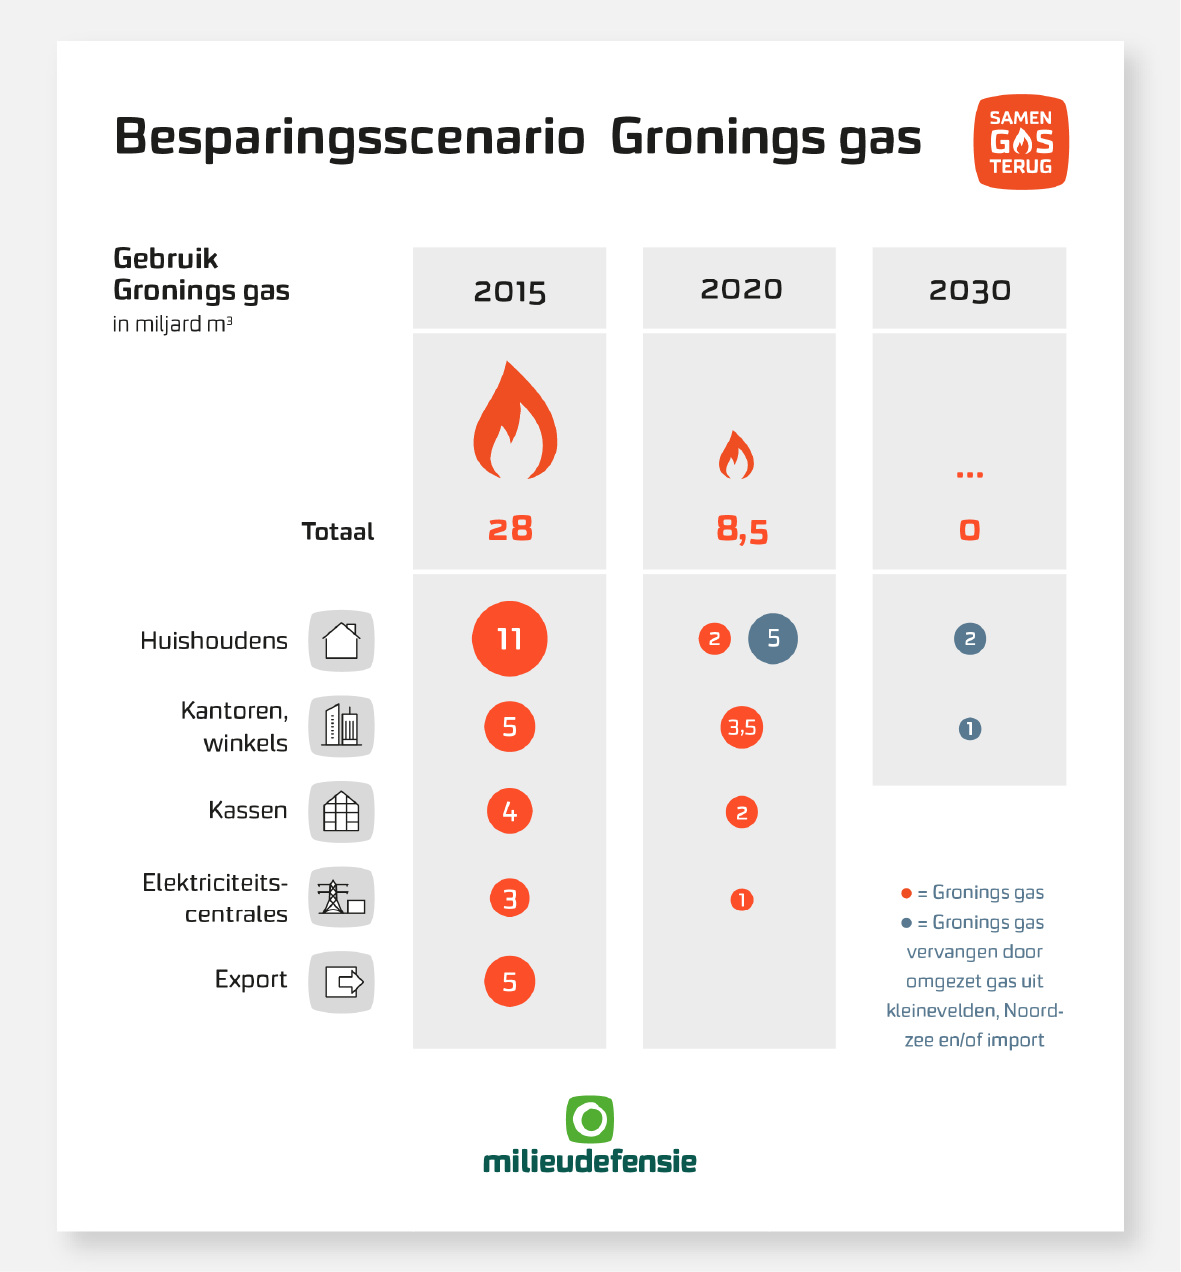 009-samen-gas-terug-infographic-gasstromen-besparing-act-impact